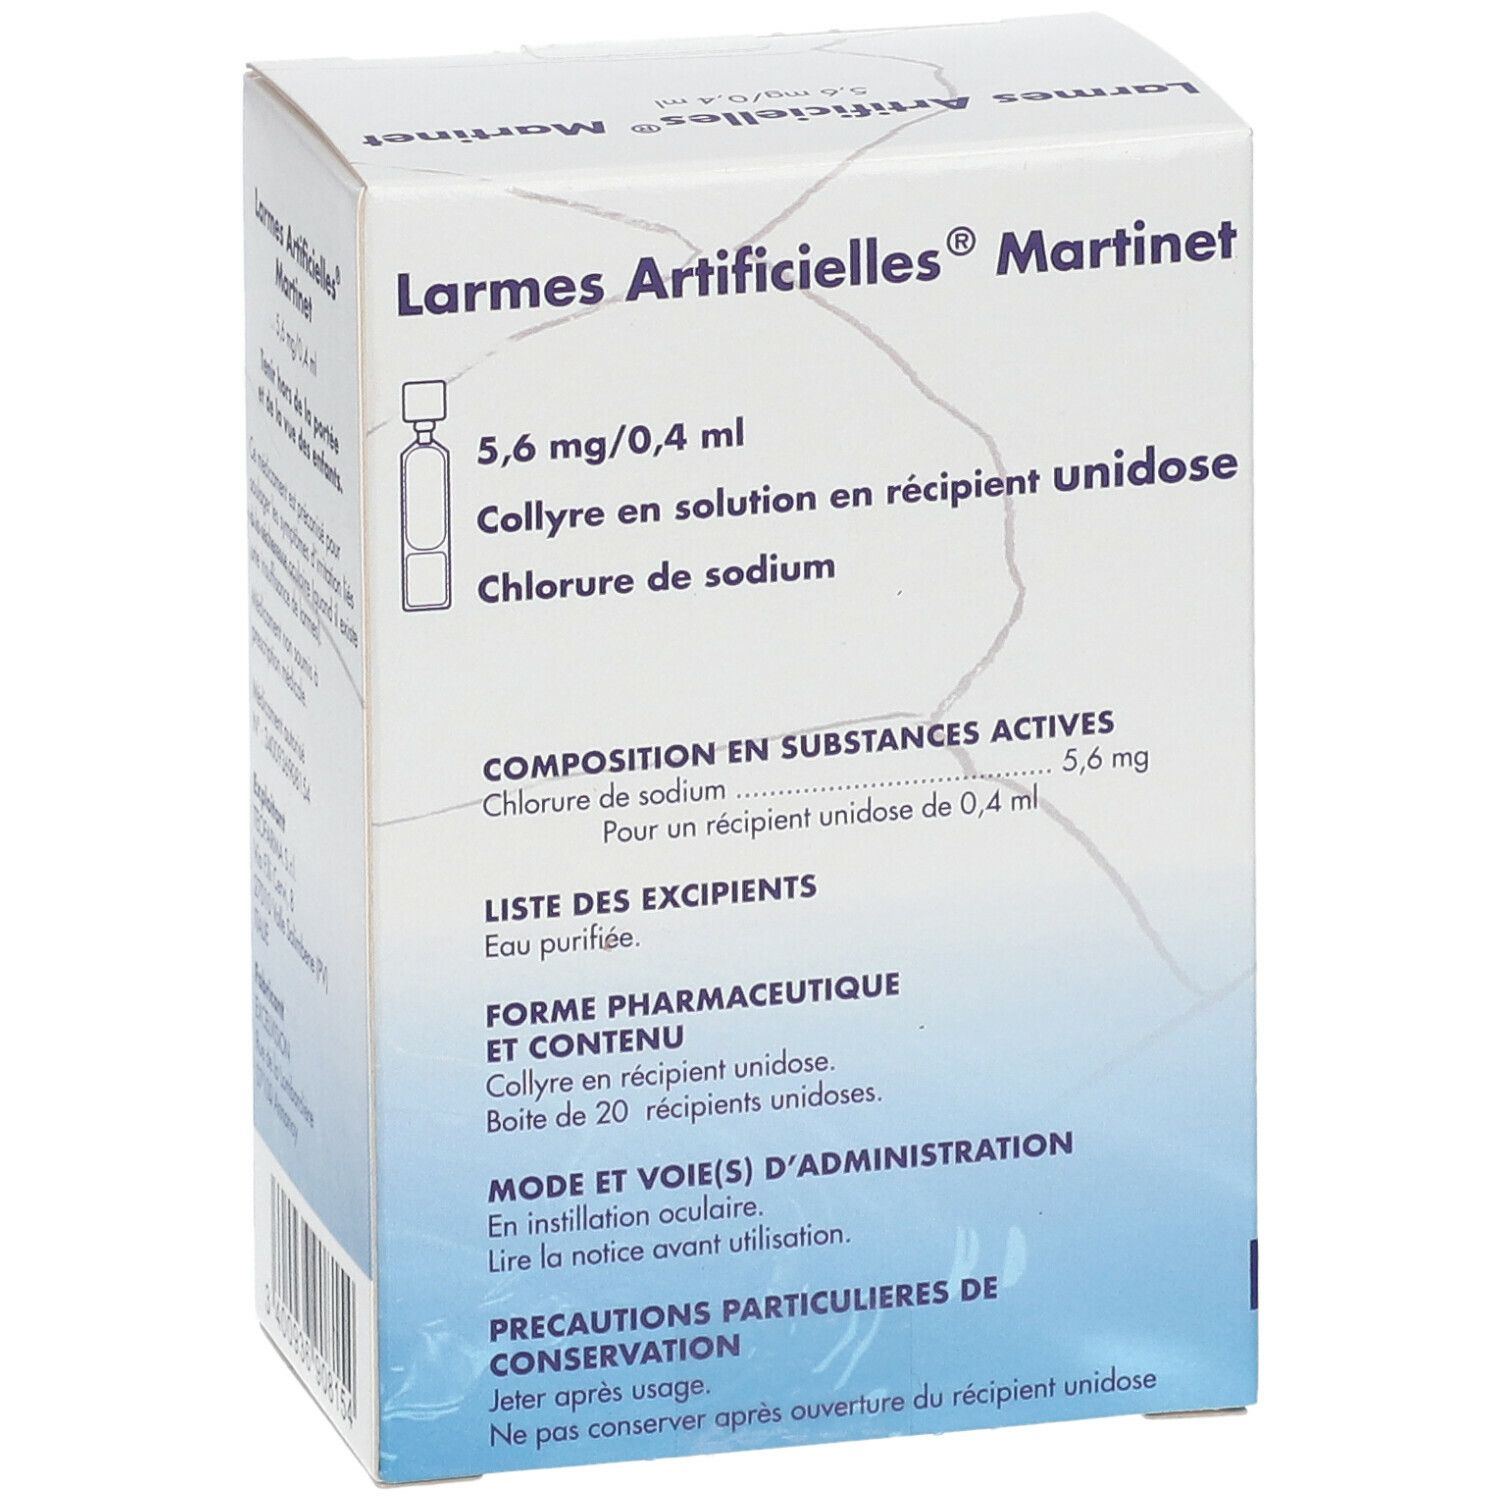 LARMES ARTIFICIELLES Martinet 1,4% Collyre 10.0 ml - Grande